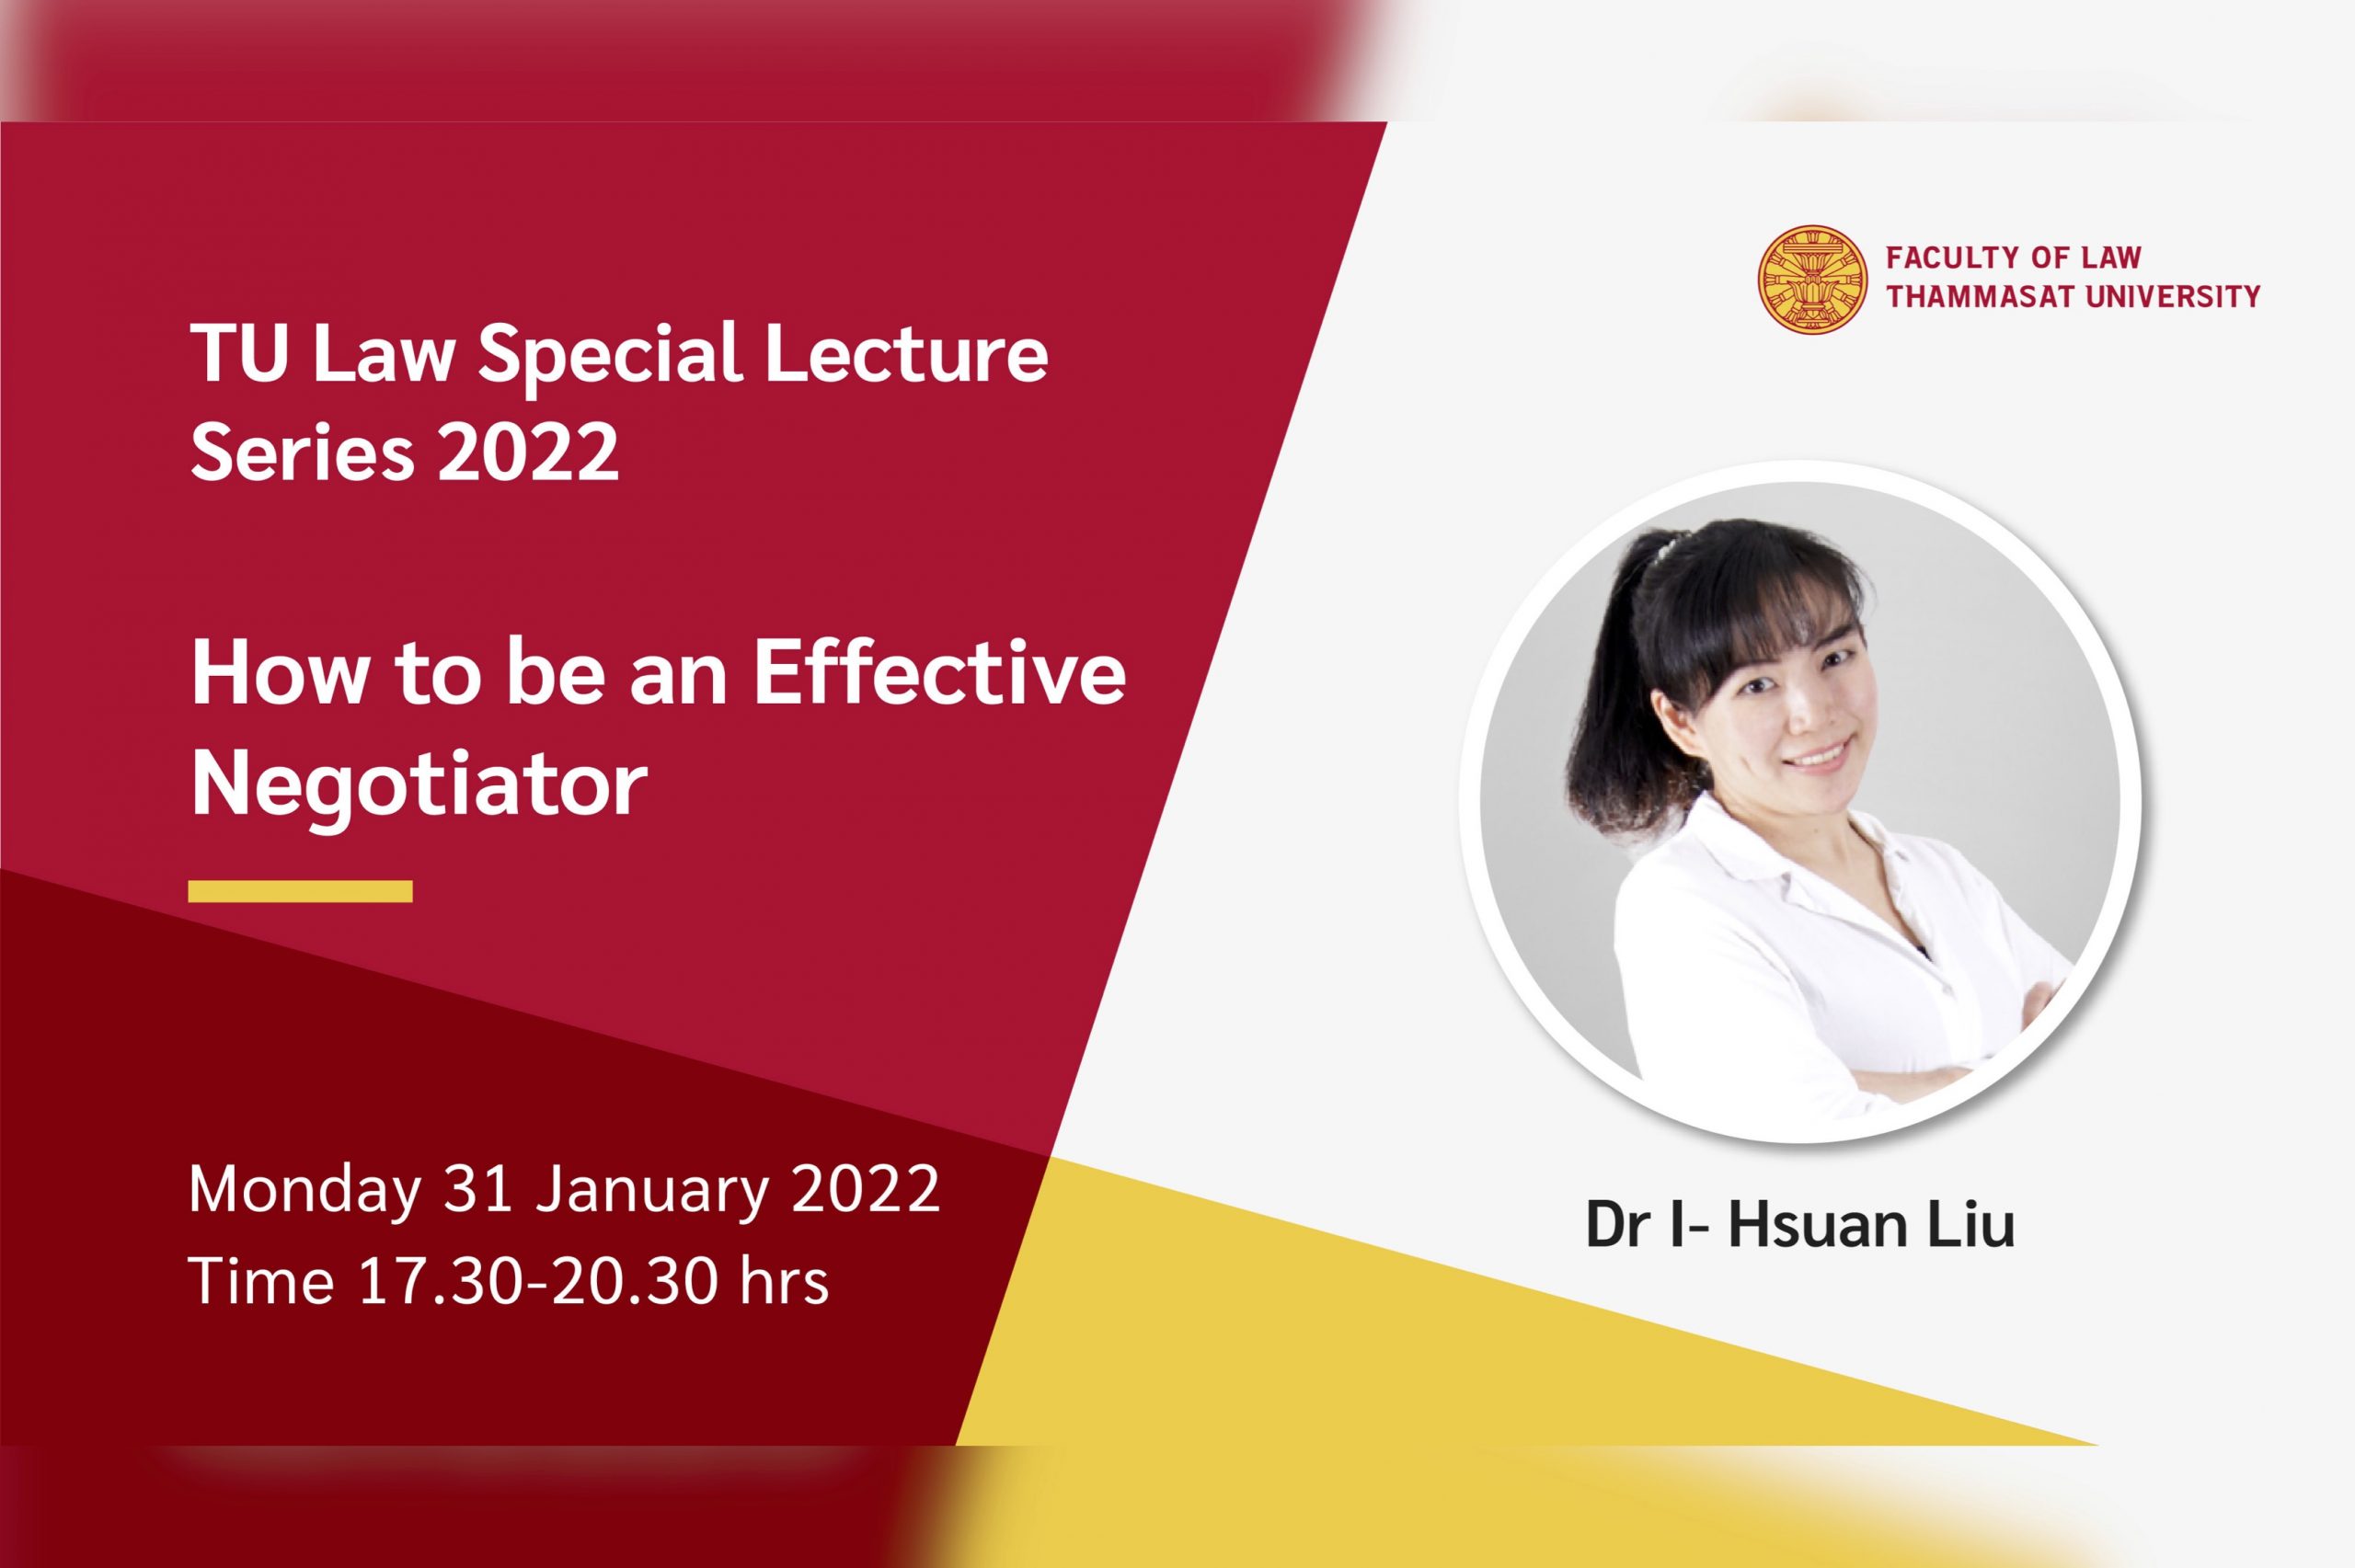 TU Law Special Lecture Series 2022 วันจันทร์ที่ 31 มกราคม 2565 เวลา 17.30-20.30 น. หัวข้อ “How to be an Effective Negotiator” โดย Dr I- Hsuan Liu